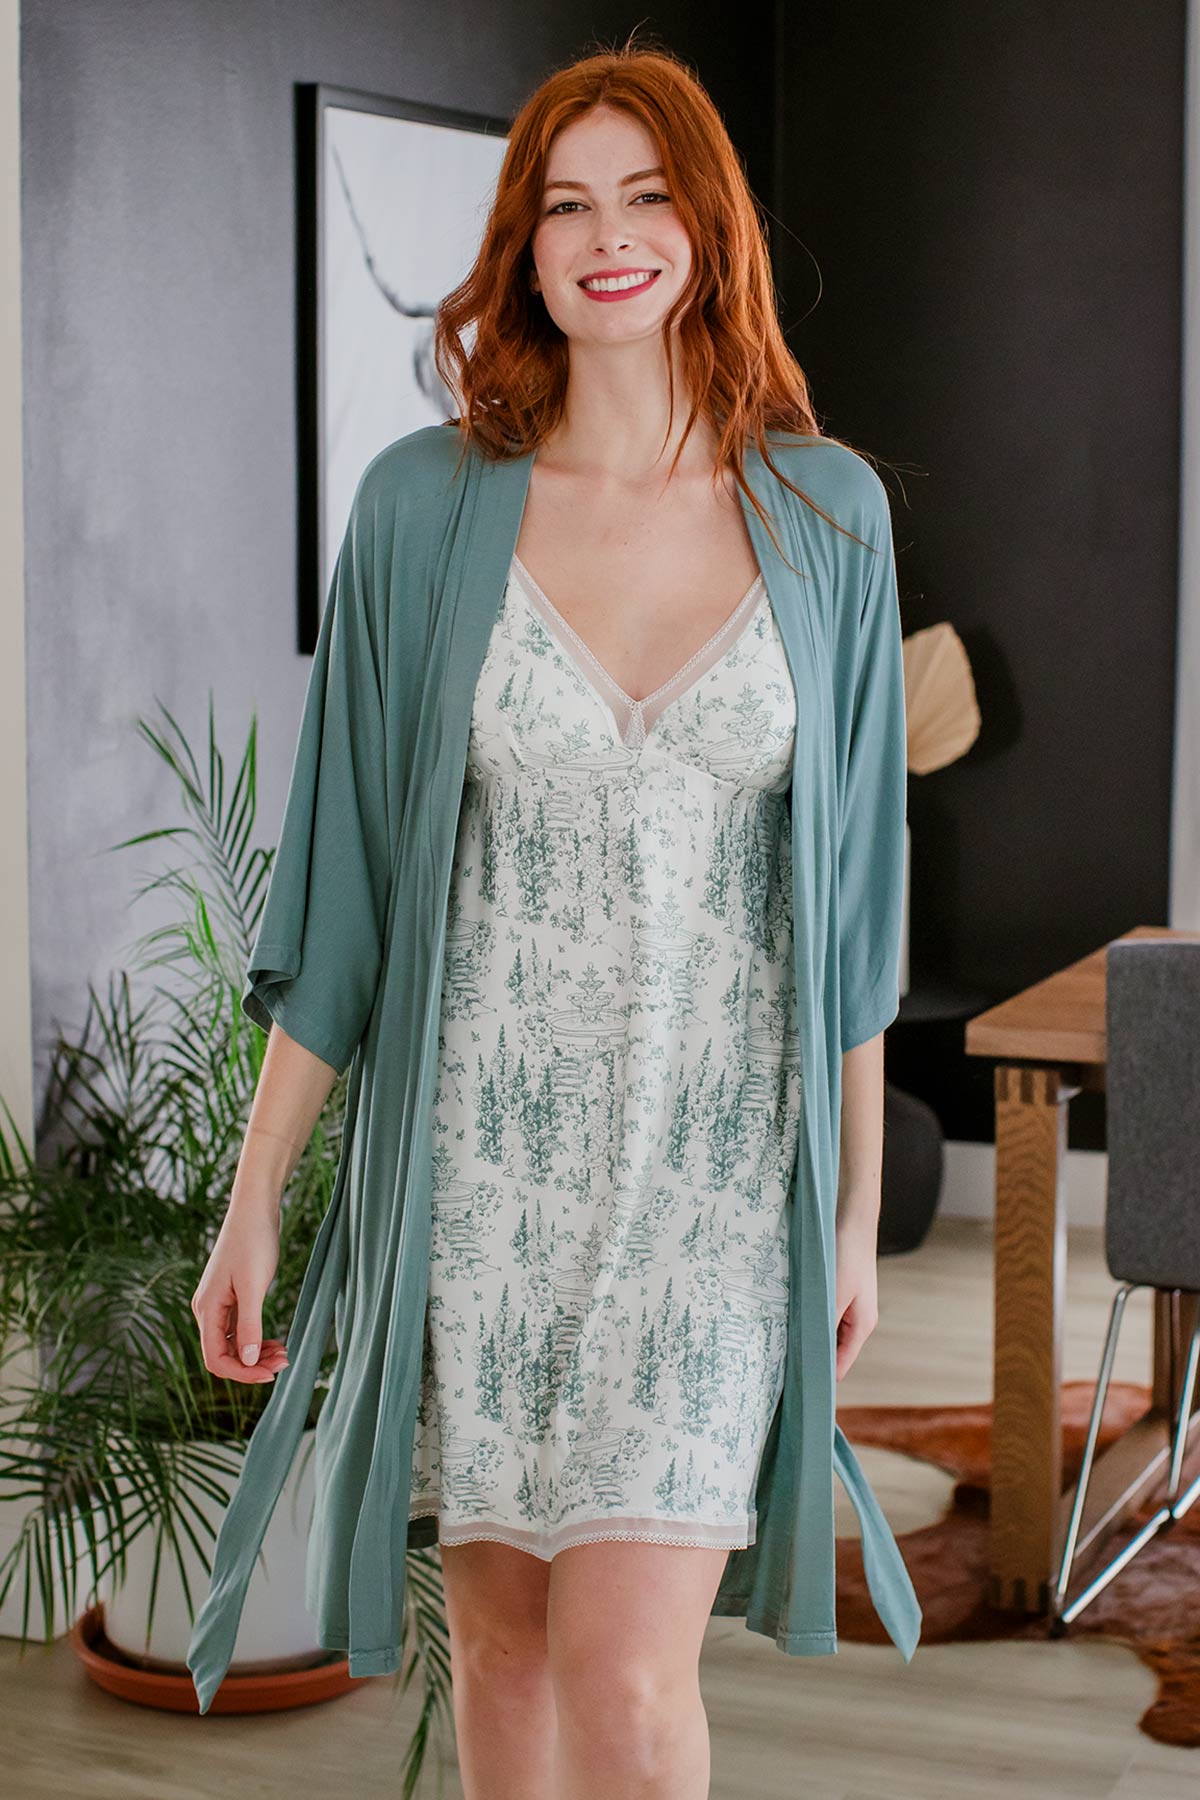 A woman walking towards the camera and smiling, wearing Yala Irish Lace Bamboo Nightgown in English Garden Print